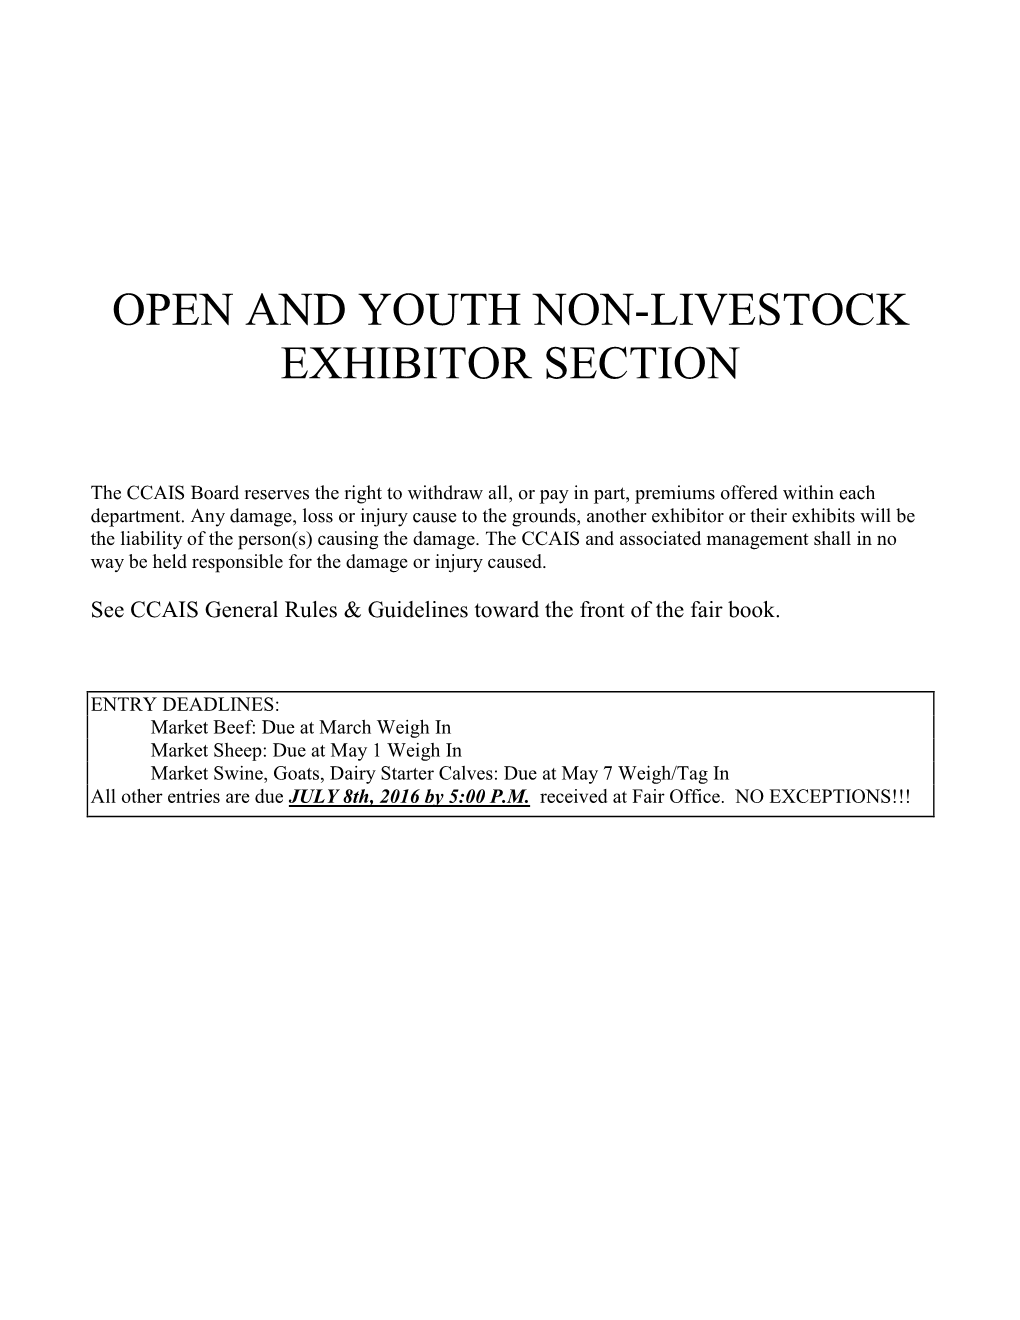 Non-Livestock Exhibitor Section